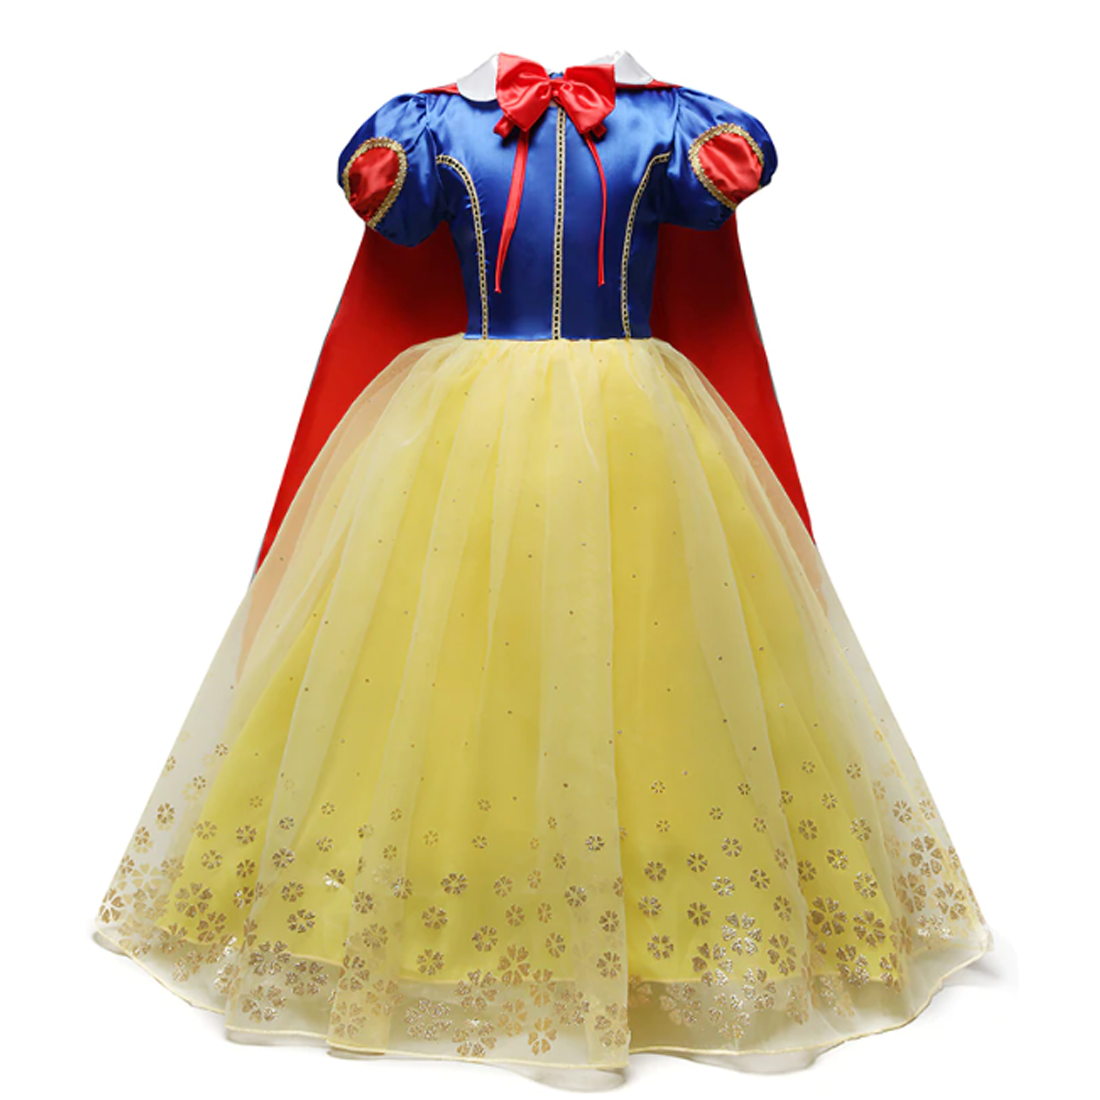 Girls Snow White Inspired Costume Fairy Tale Princess Dress